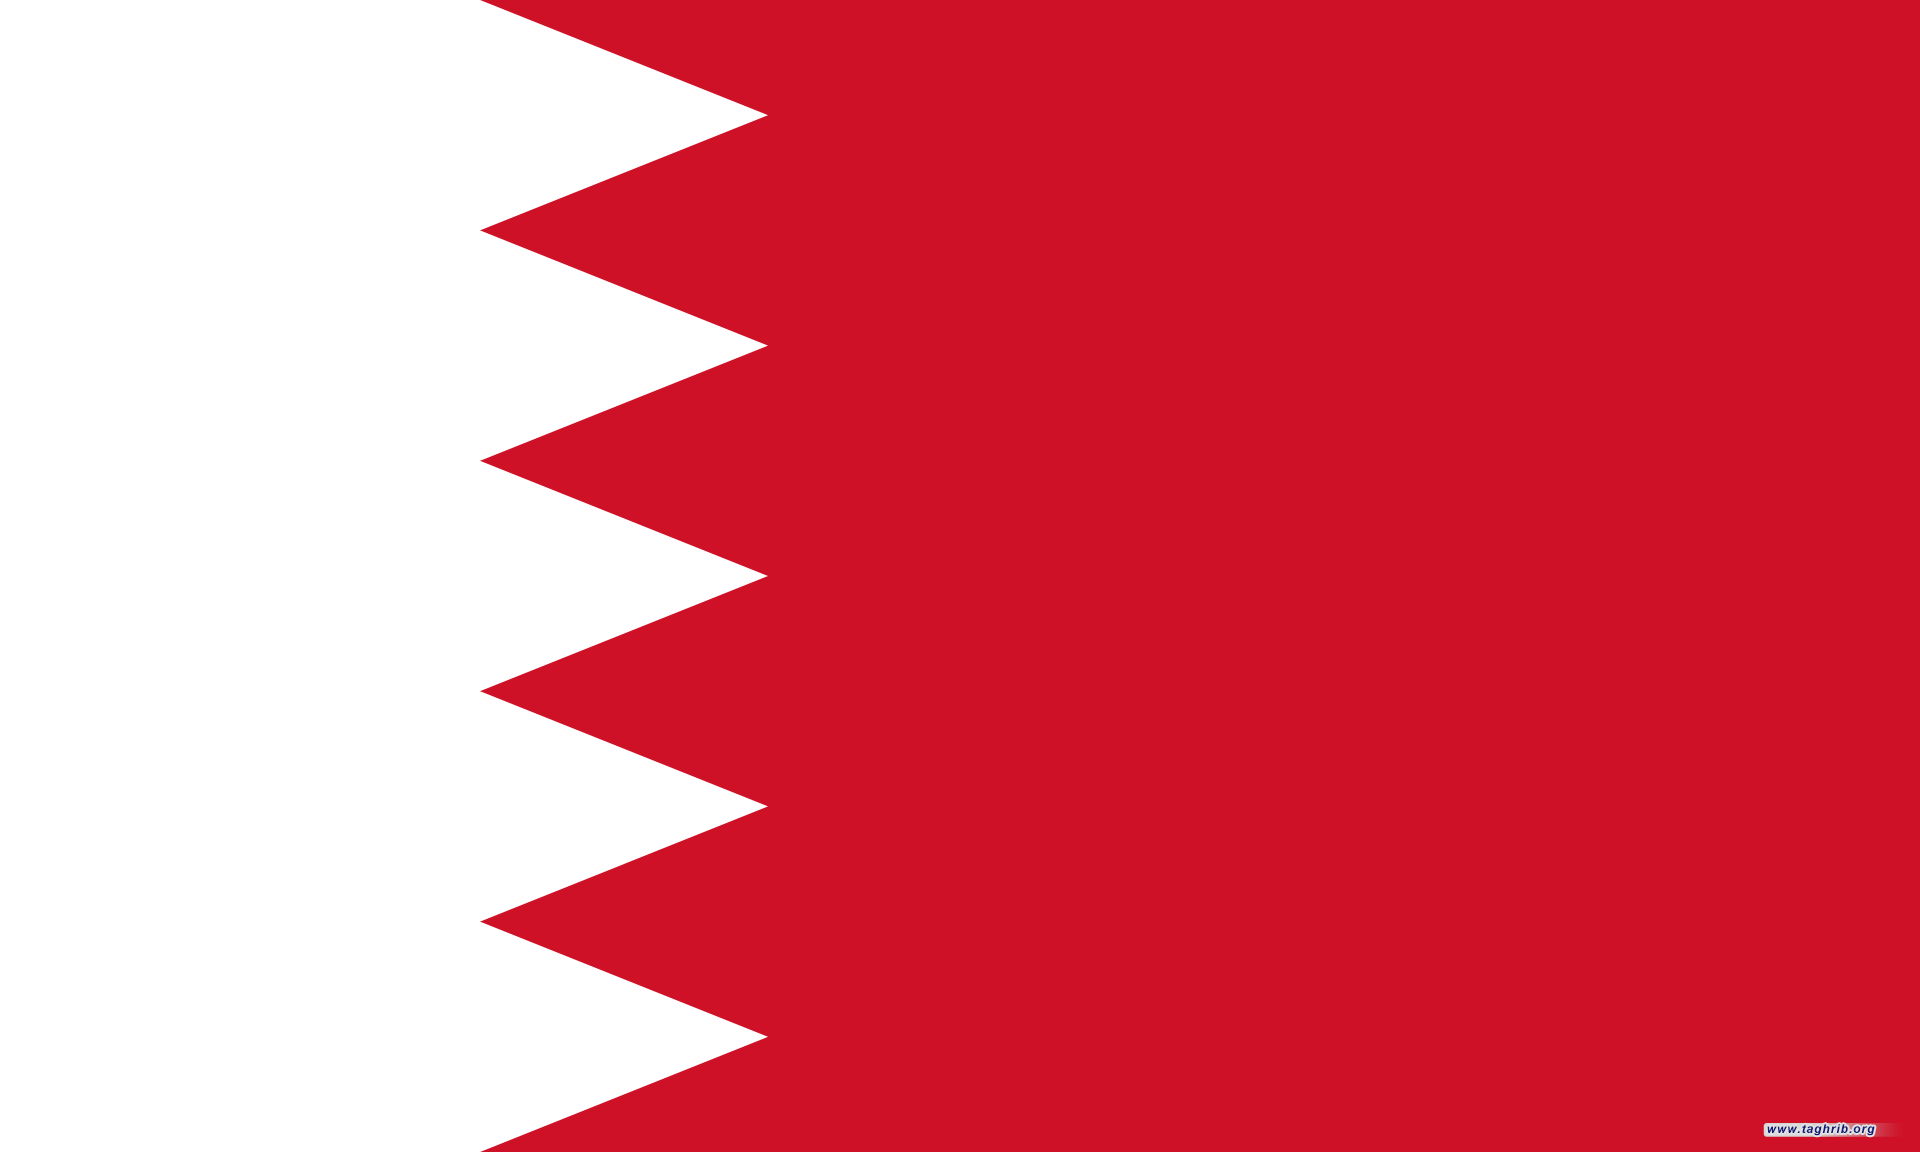 بحرين